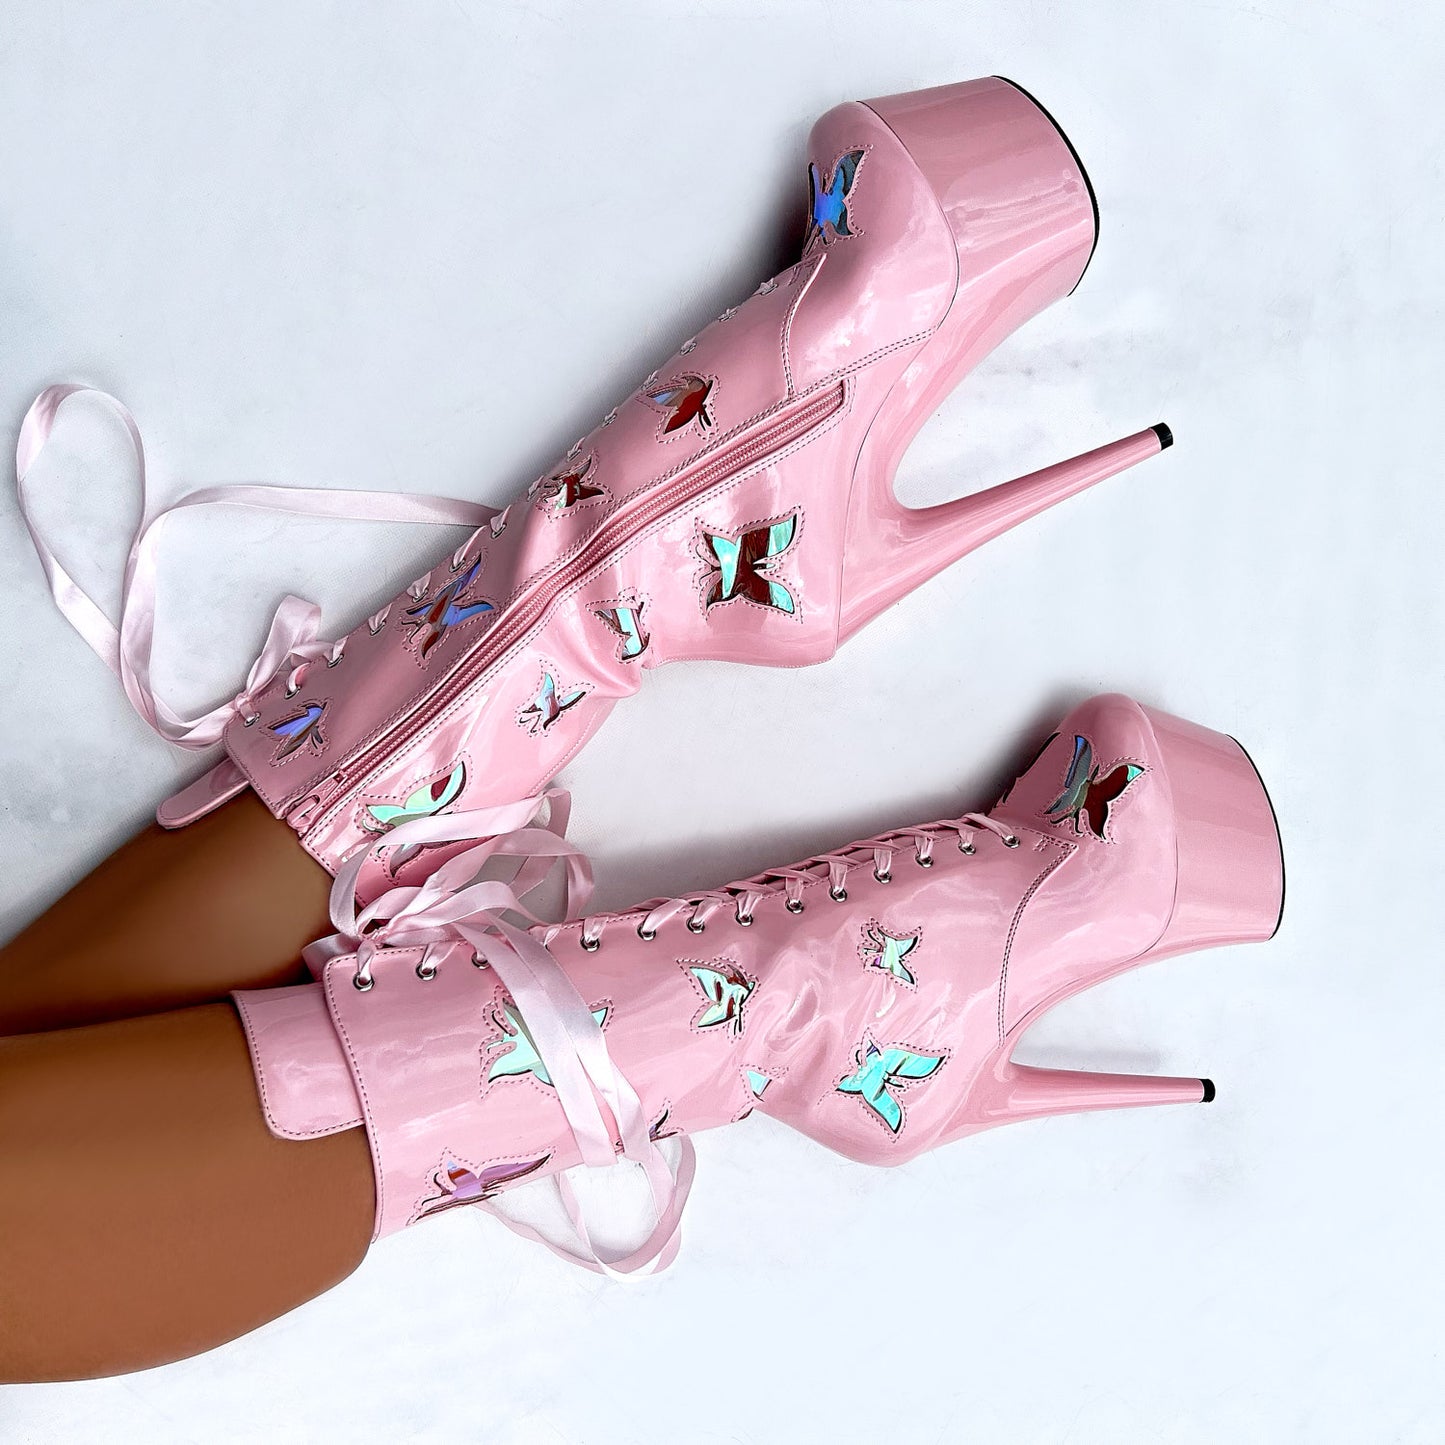 Butterfly Boot - Pink - 7 INCH, stripper shoe, stripper heel, pole heel, not a pleaser, platform, dancer, pole dance, floor work